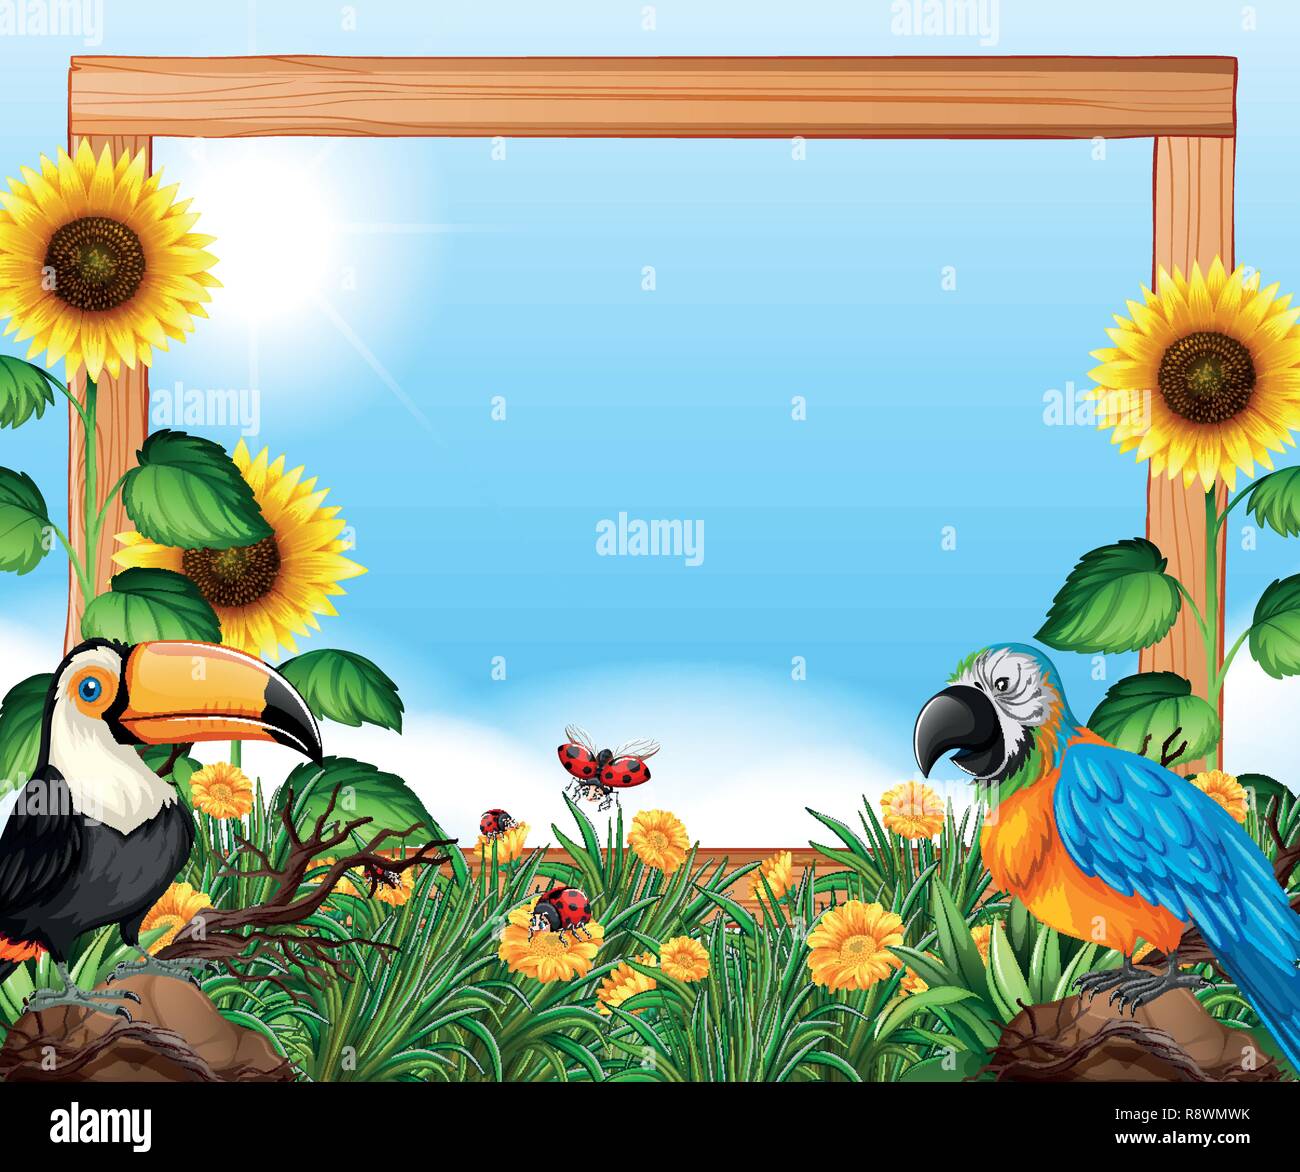 Birds on wooden frame illustration Stock Vector Image & - Alamy